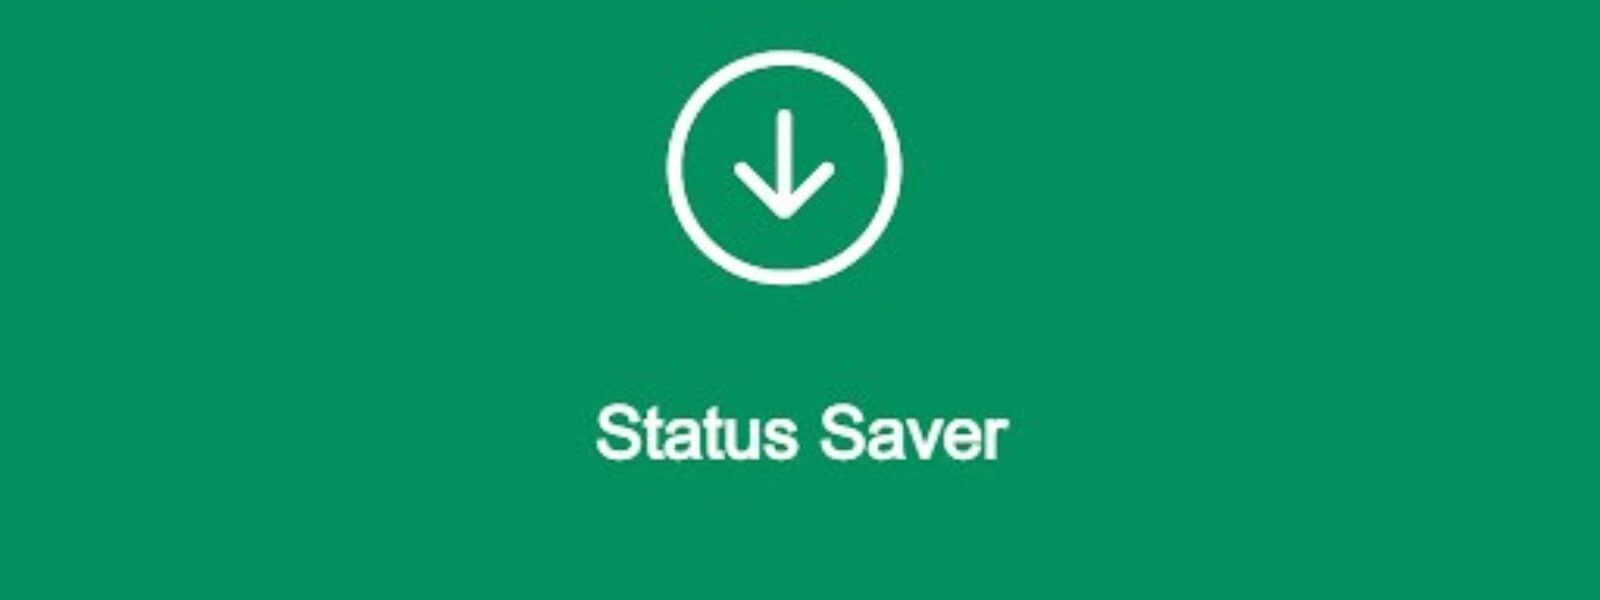 Status Saver for WhatsApp pentru Android | iOS